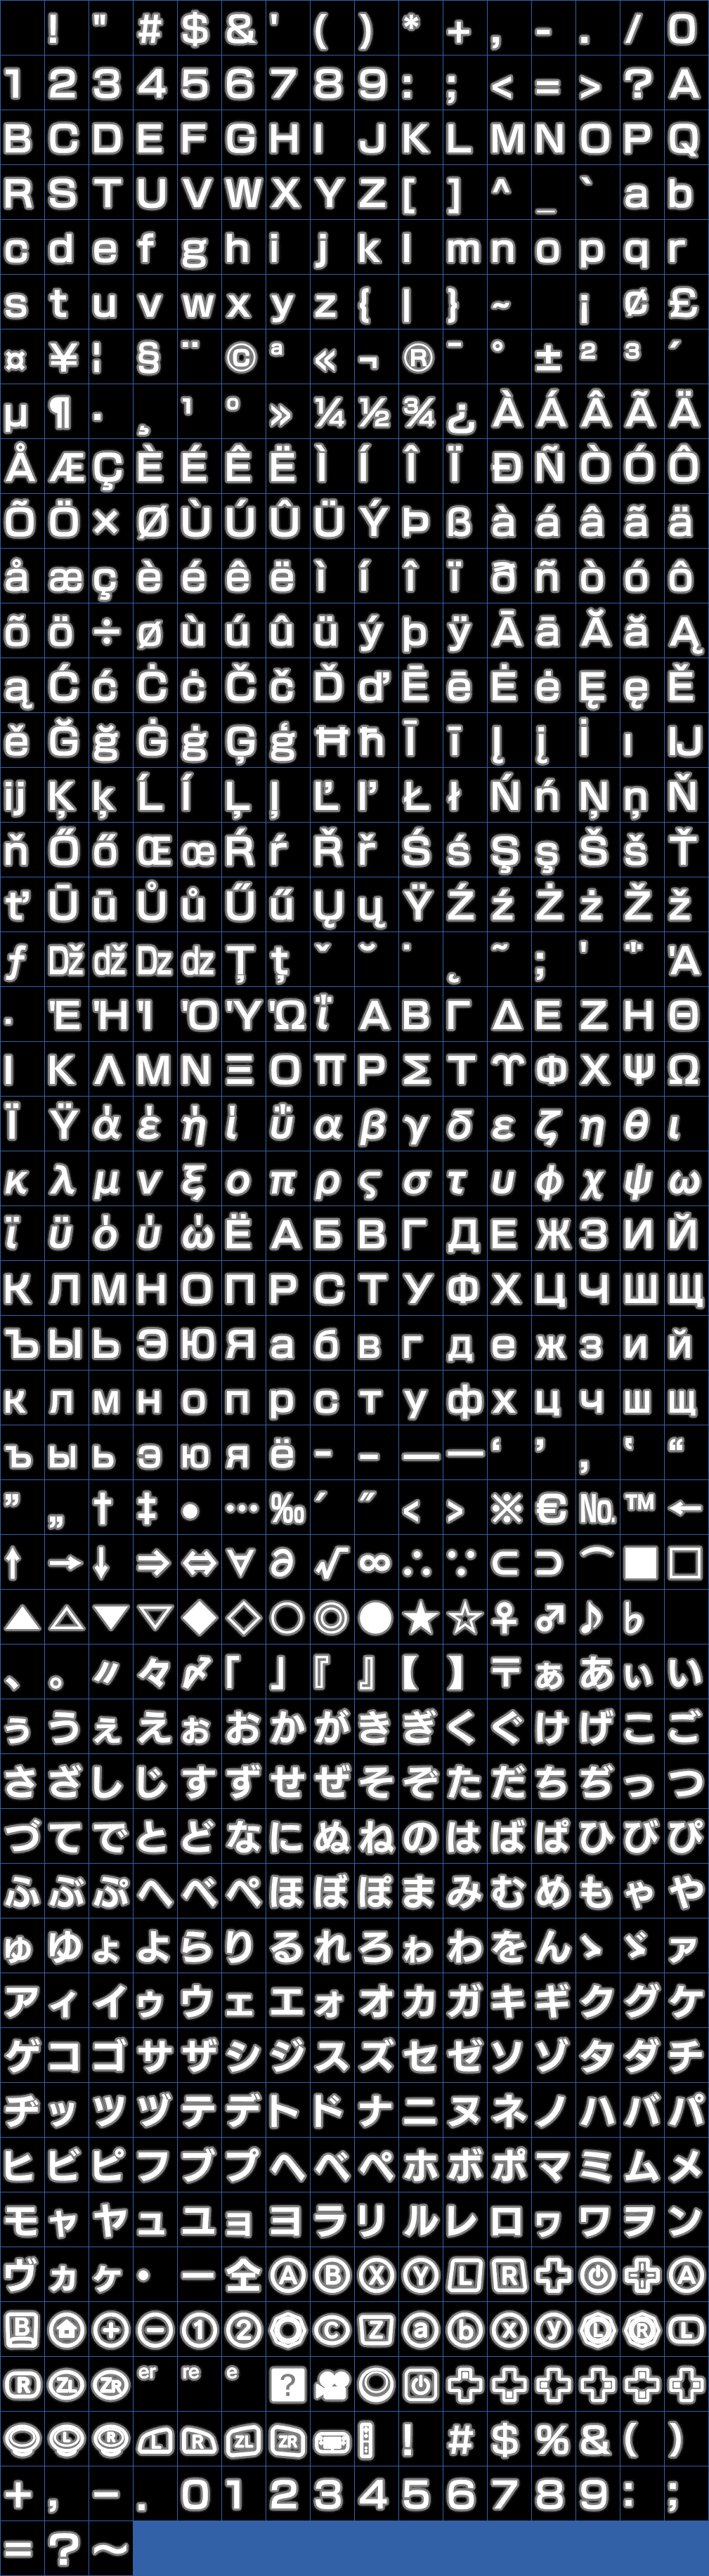 Wii U/MK8 fonts | GBAtemp.net - The Independent Video Game Community